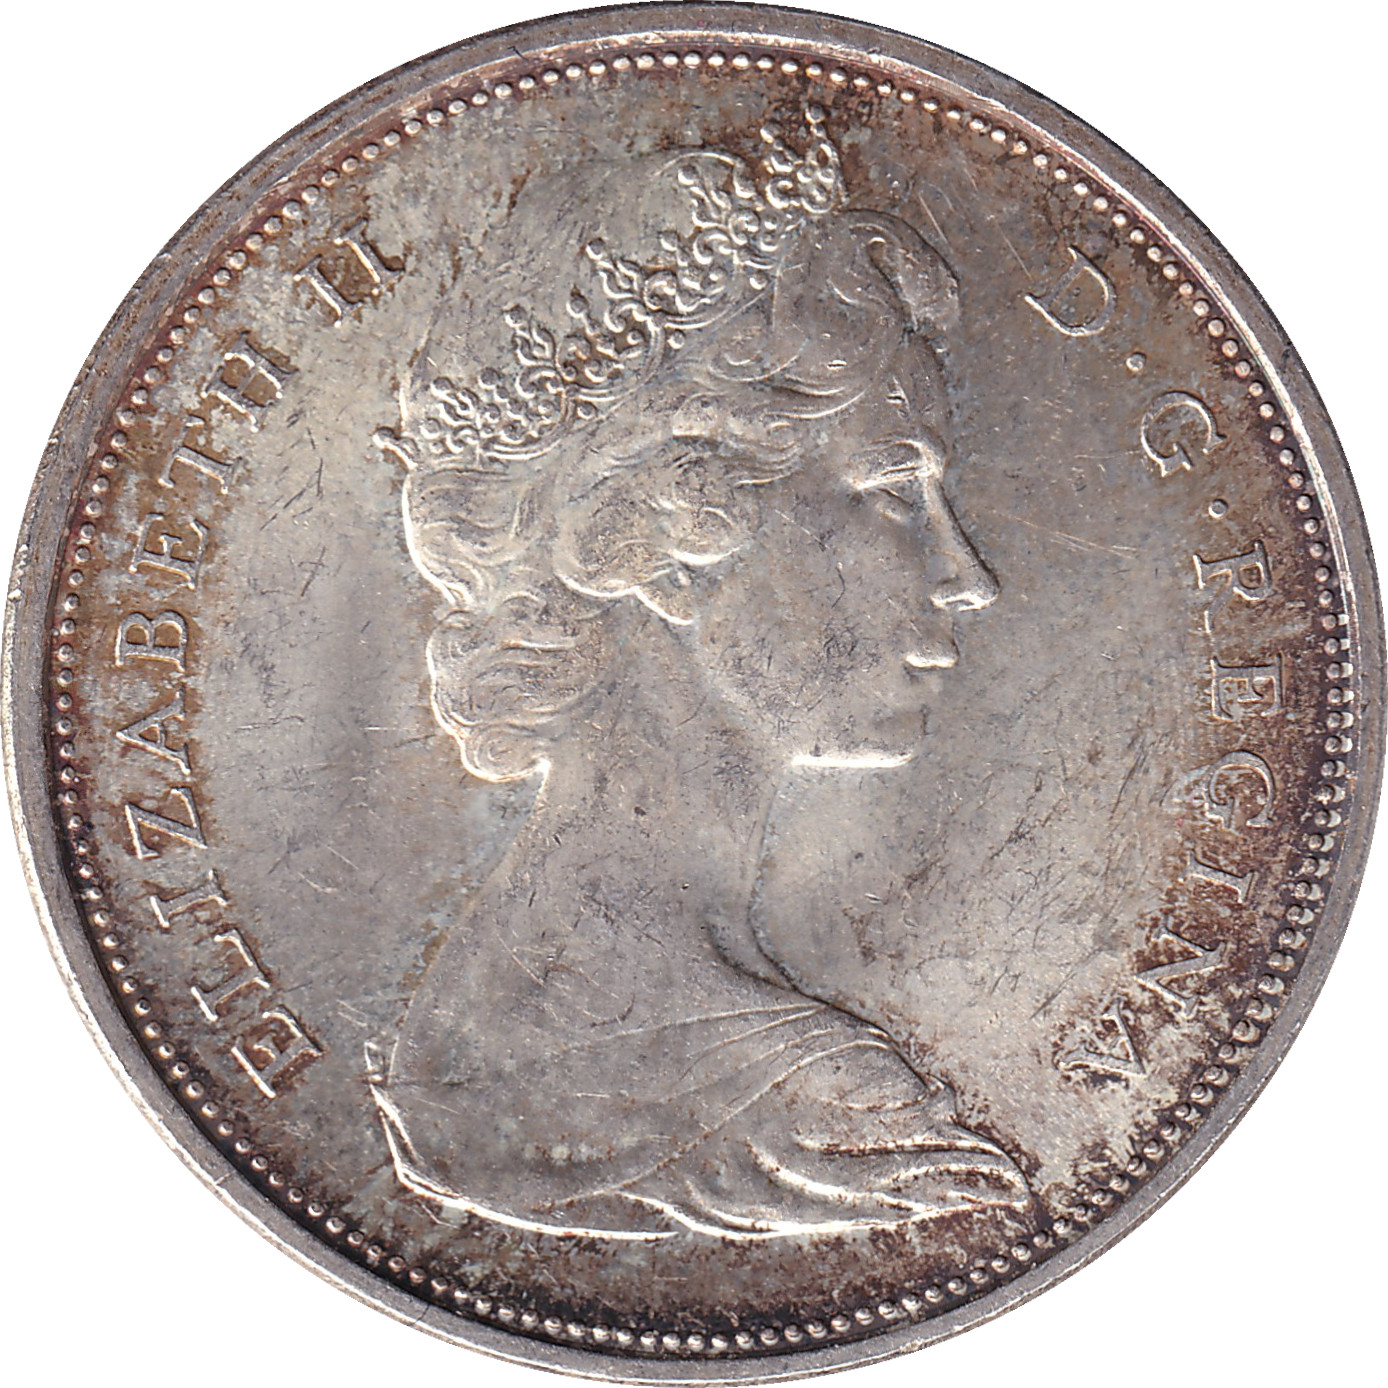 50 cents - Confédération - 100 years